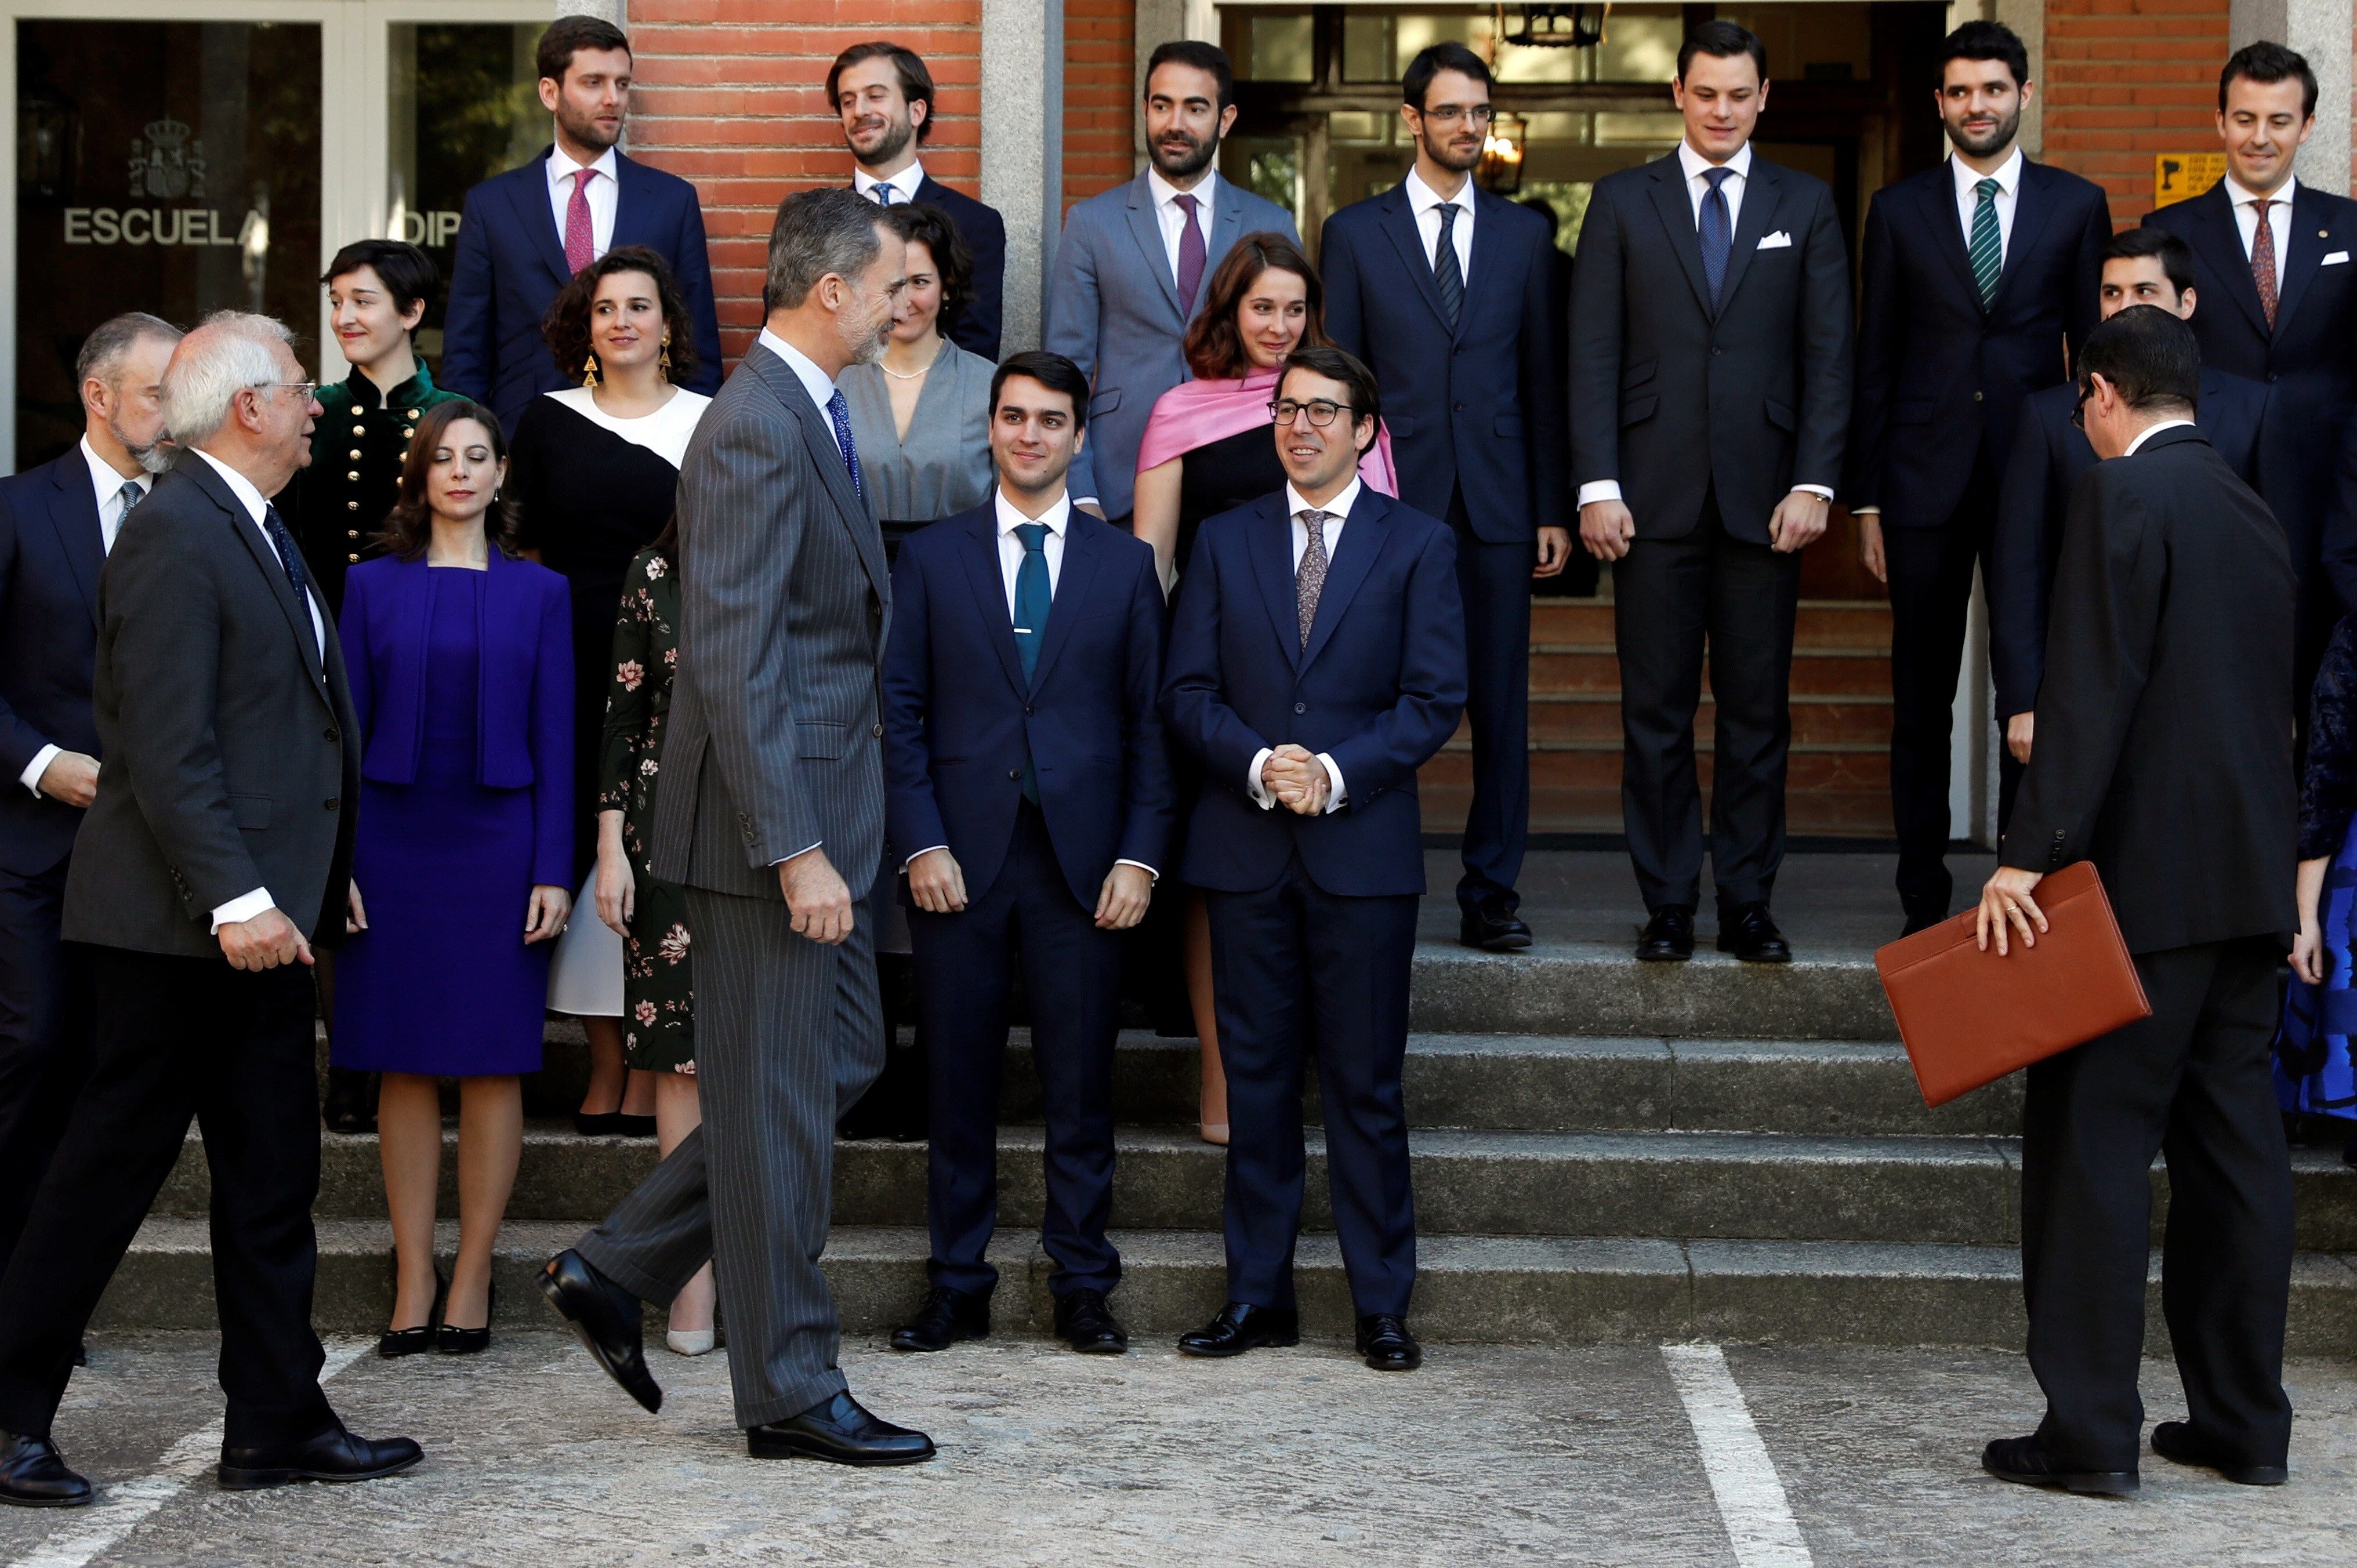 Felipe VI urges new Spanish diplomats to spread the "true image" of Spain